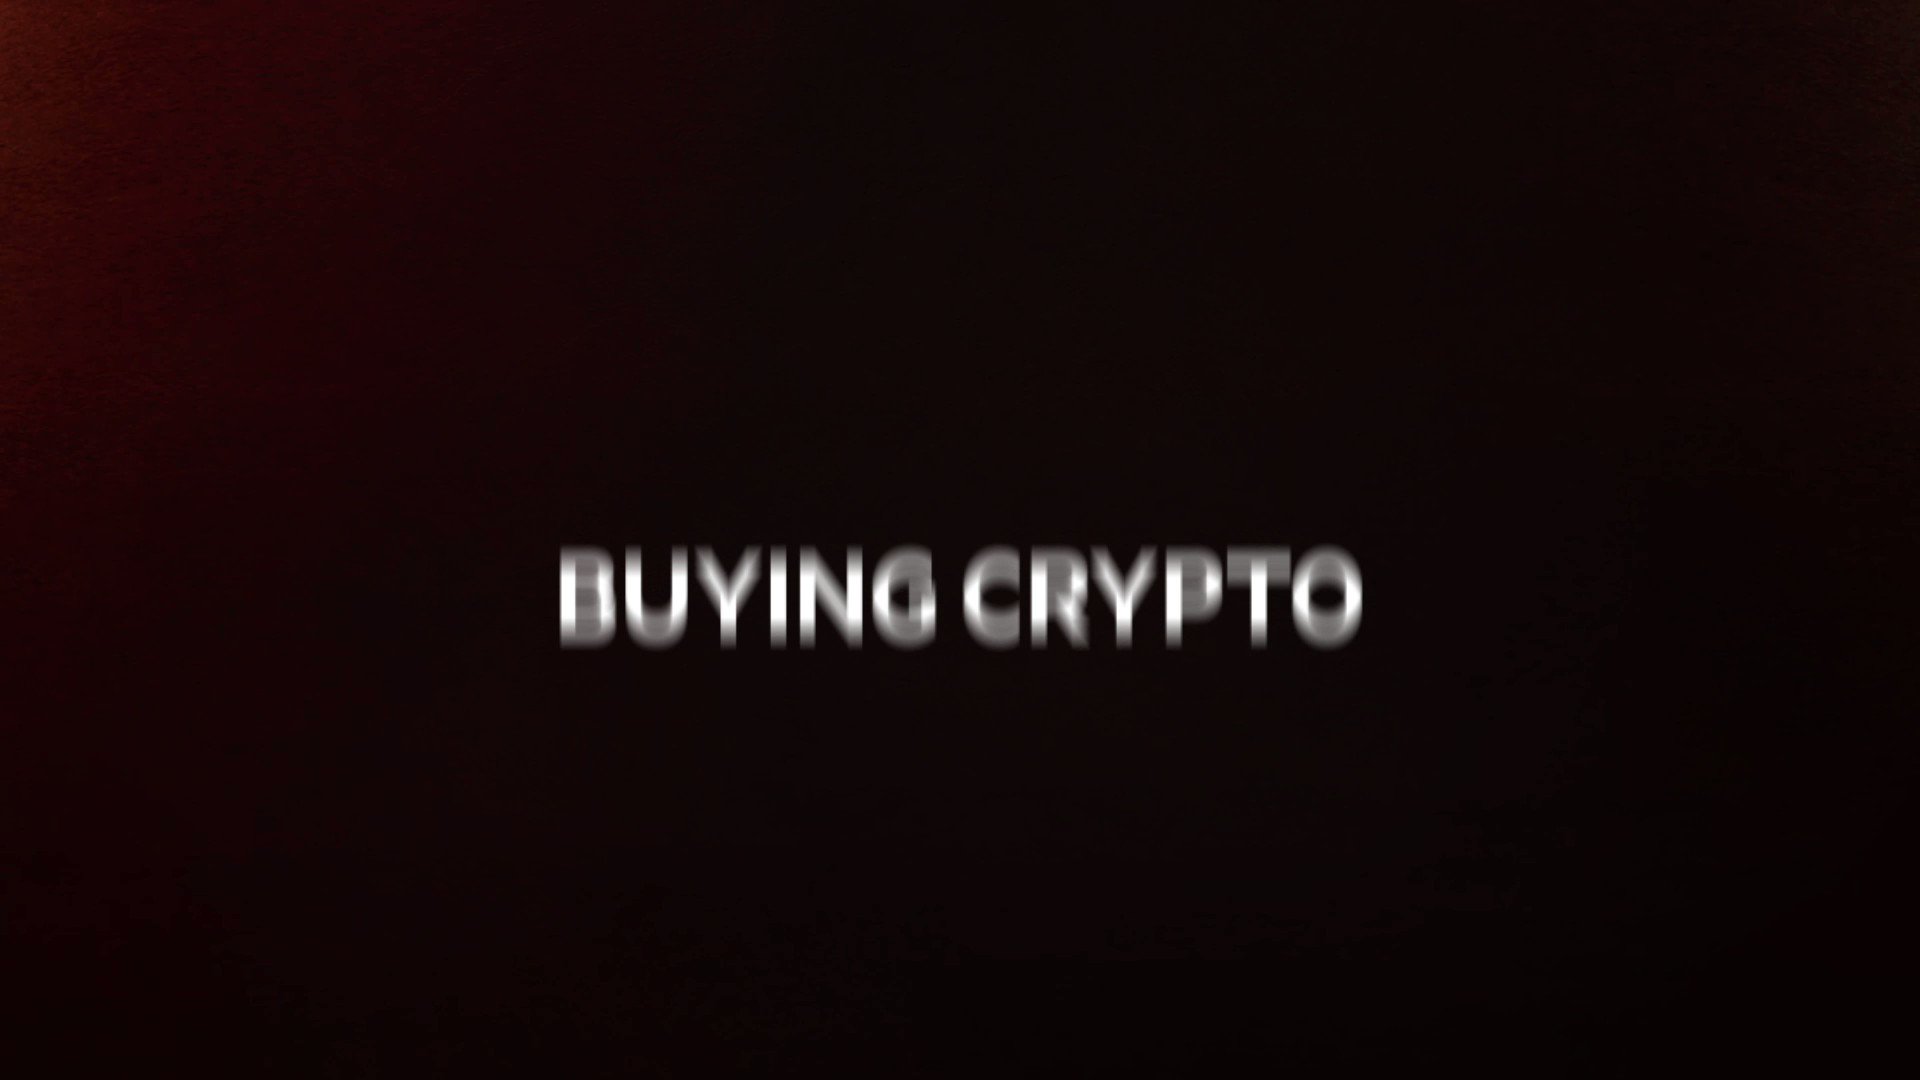 Xapo logo editorial stock photo. Image of cryptocurrency - 105606238